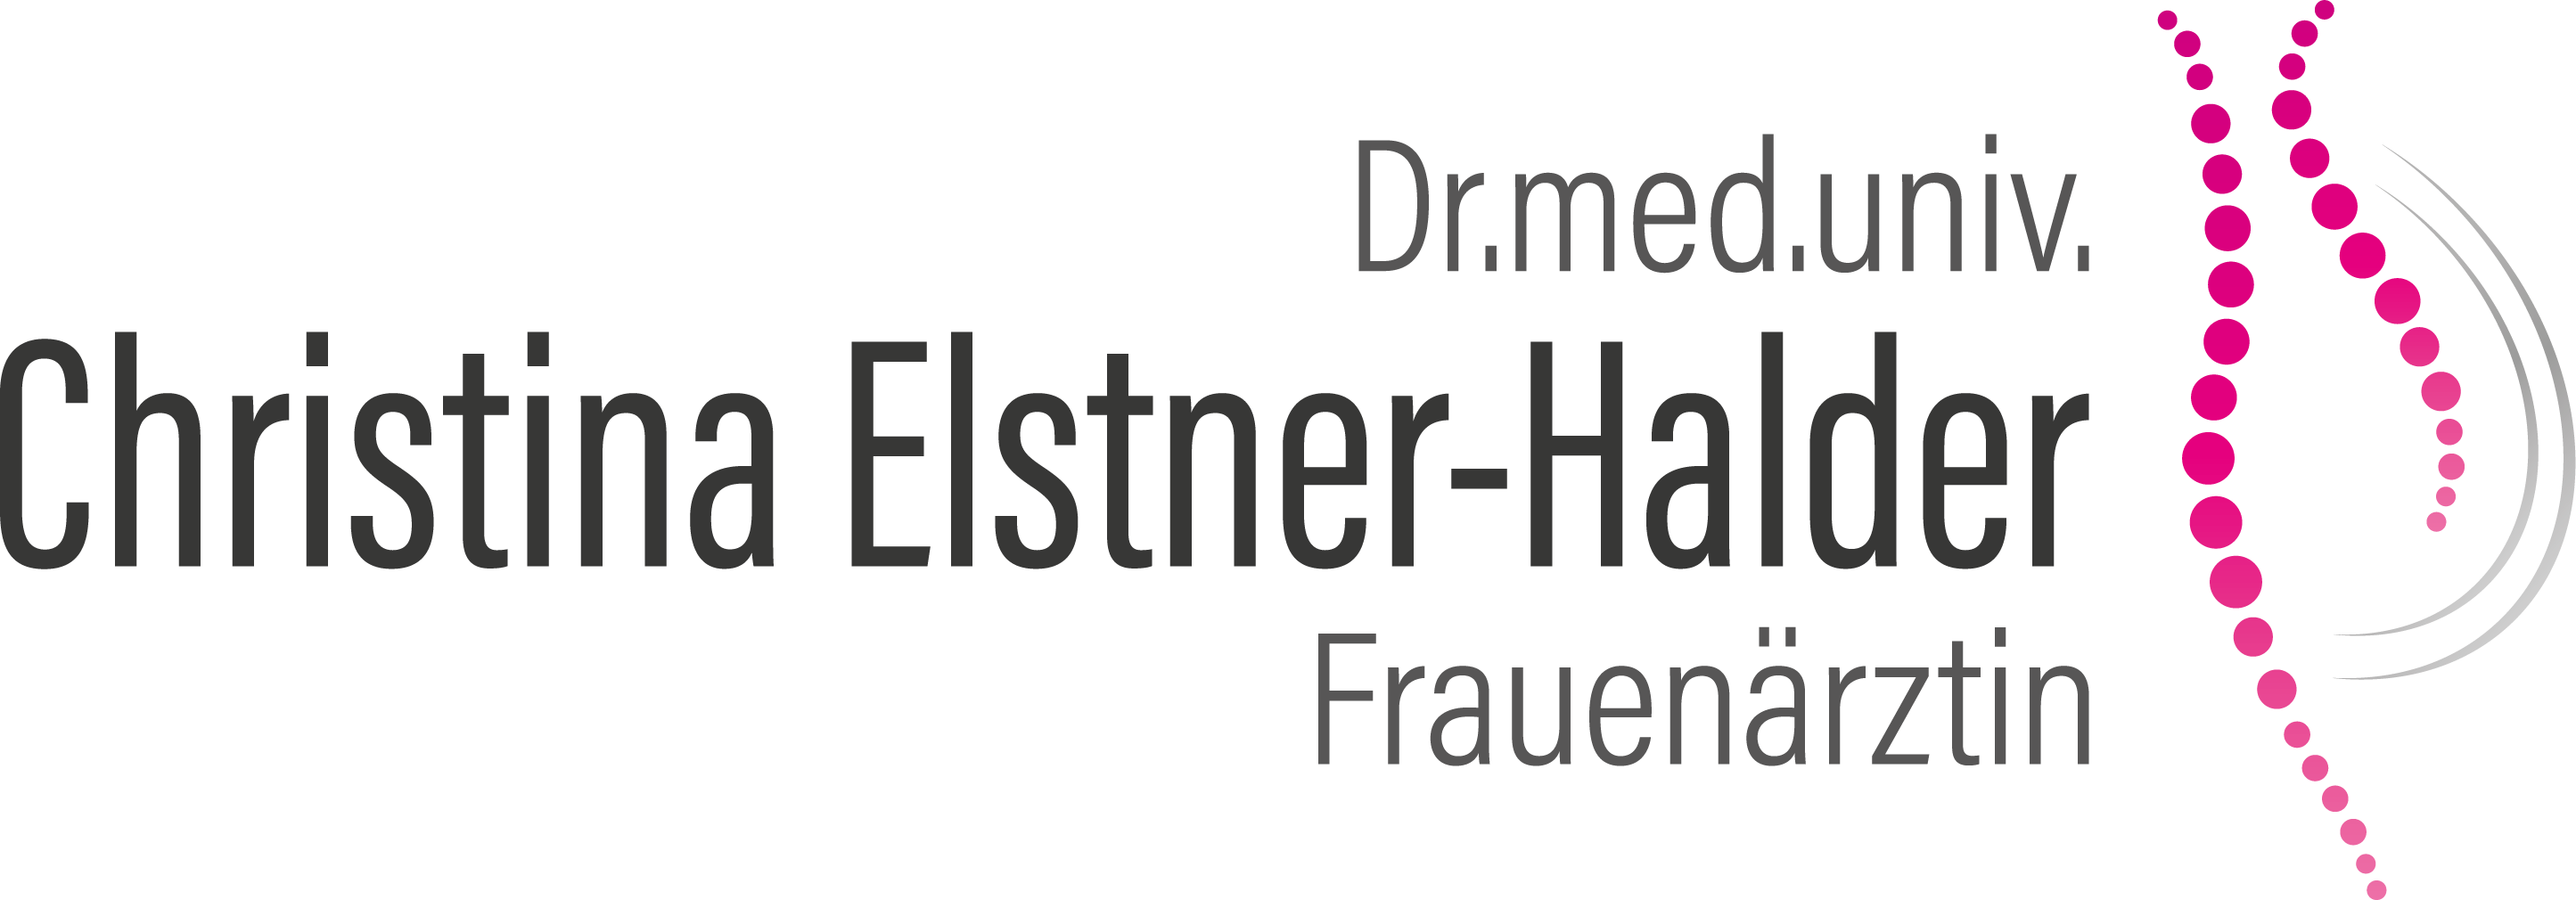 Frauenarztpraxis Dr. Elstner-Halder